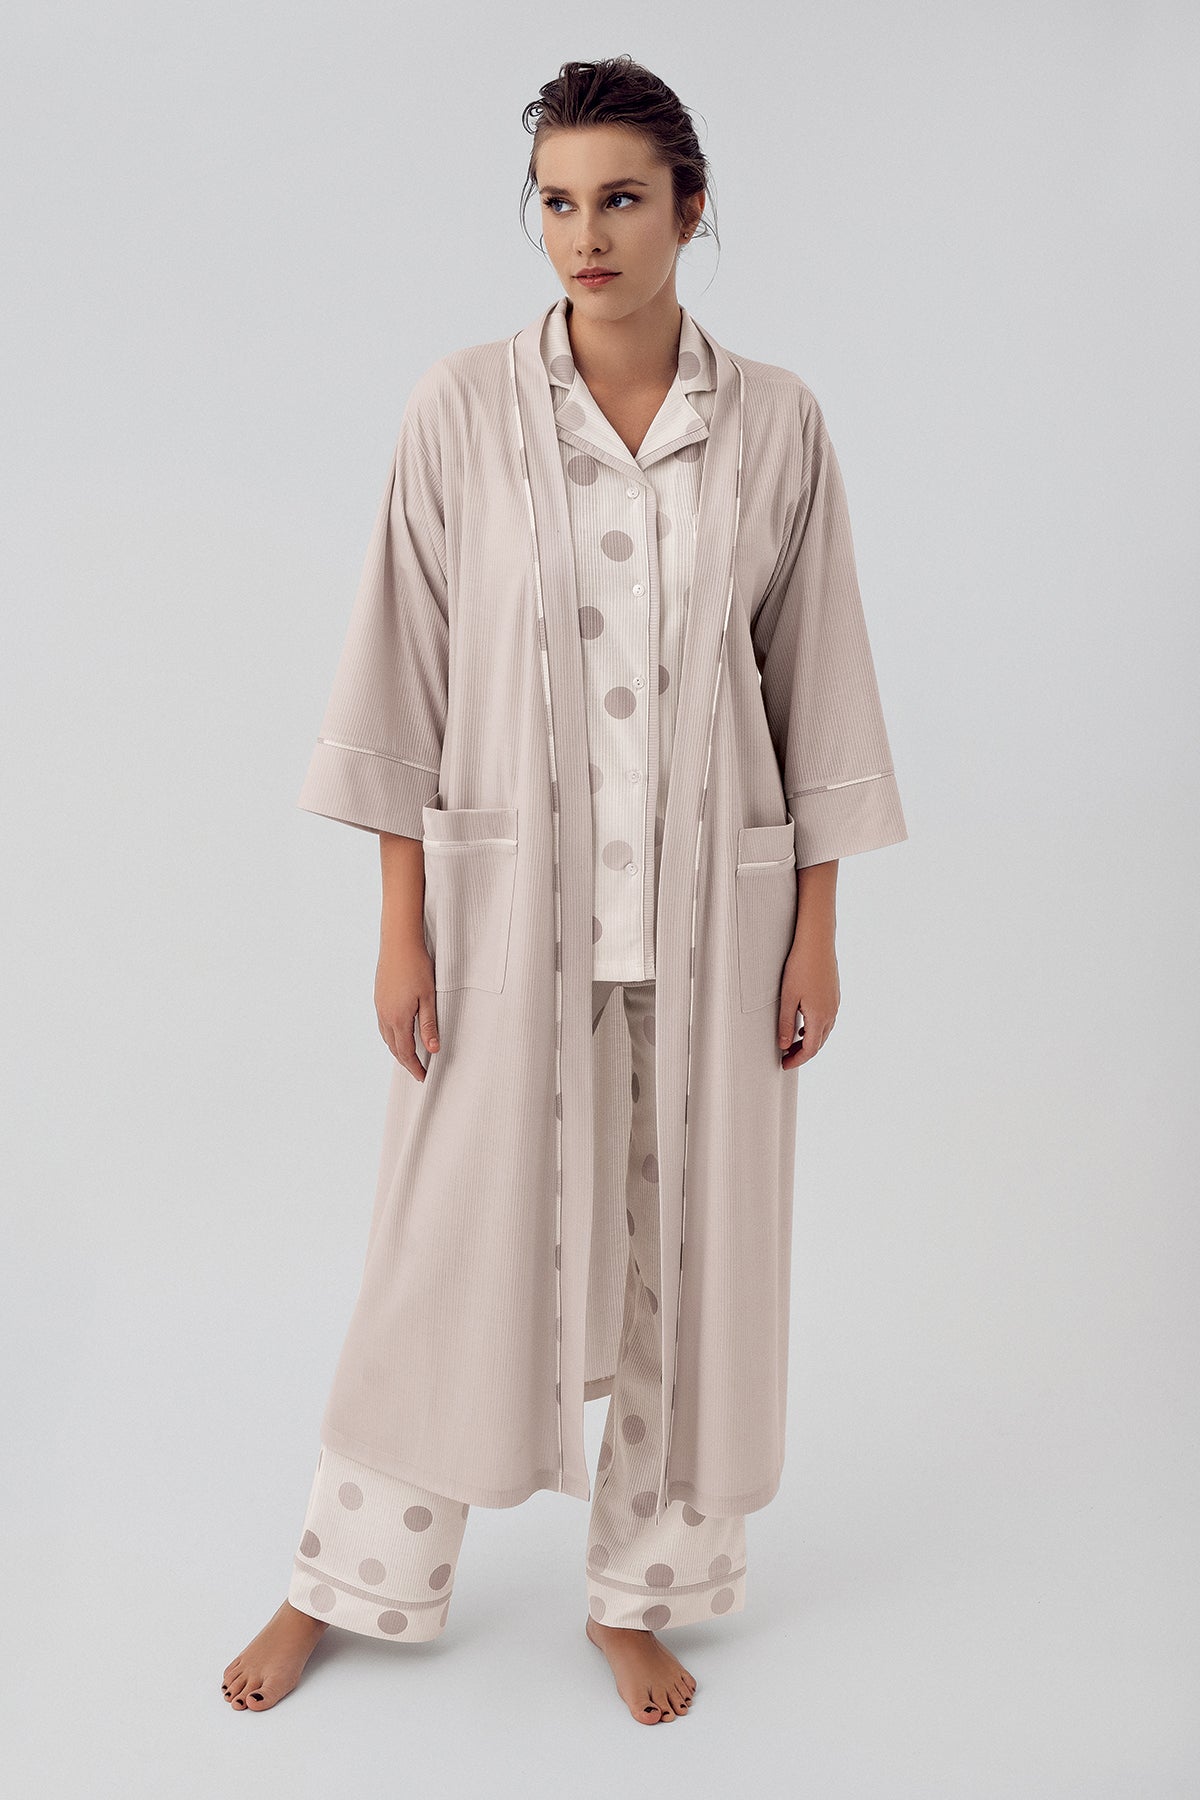 Polka Dot 3-Pieces Maternity & Nursing Pajamas With Robe Beige - 16310